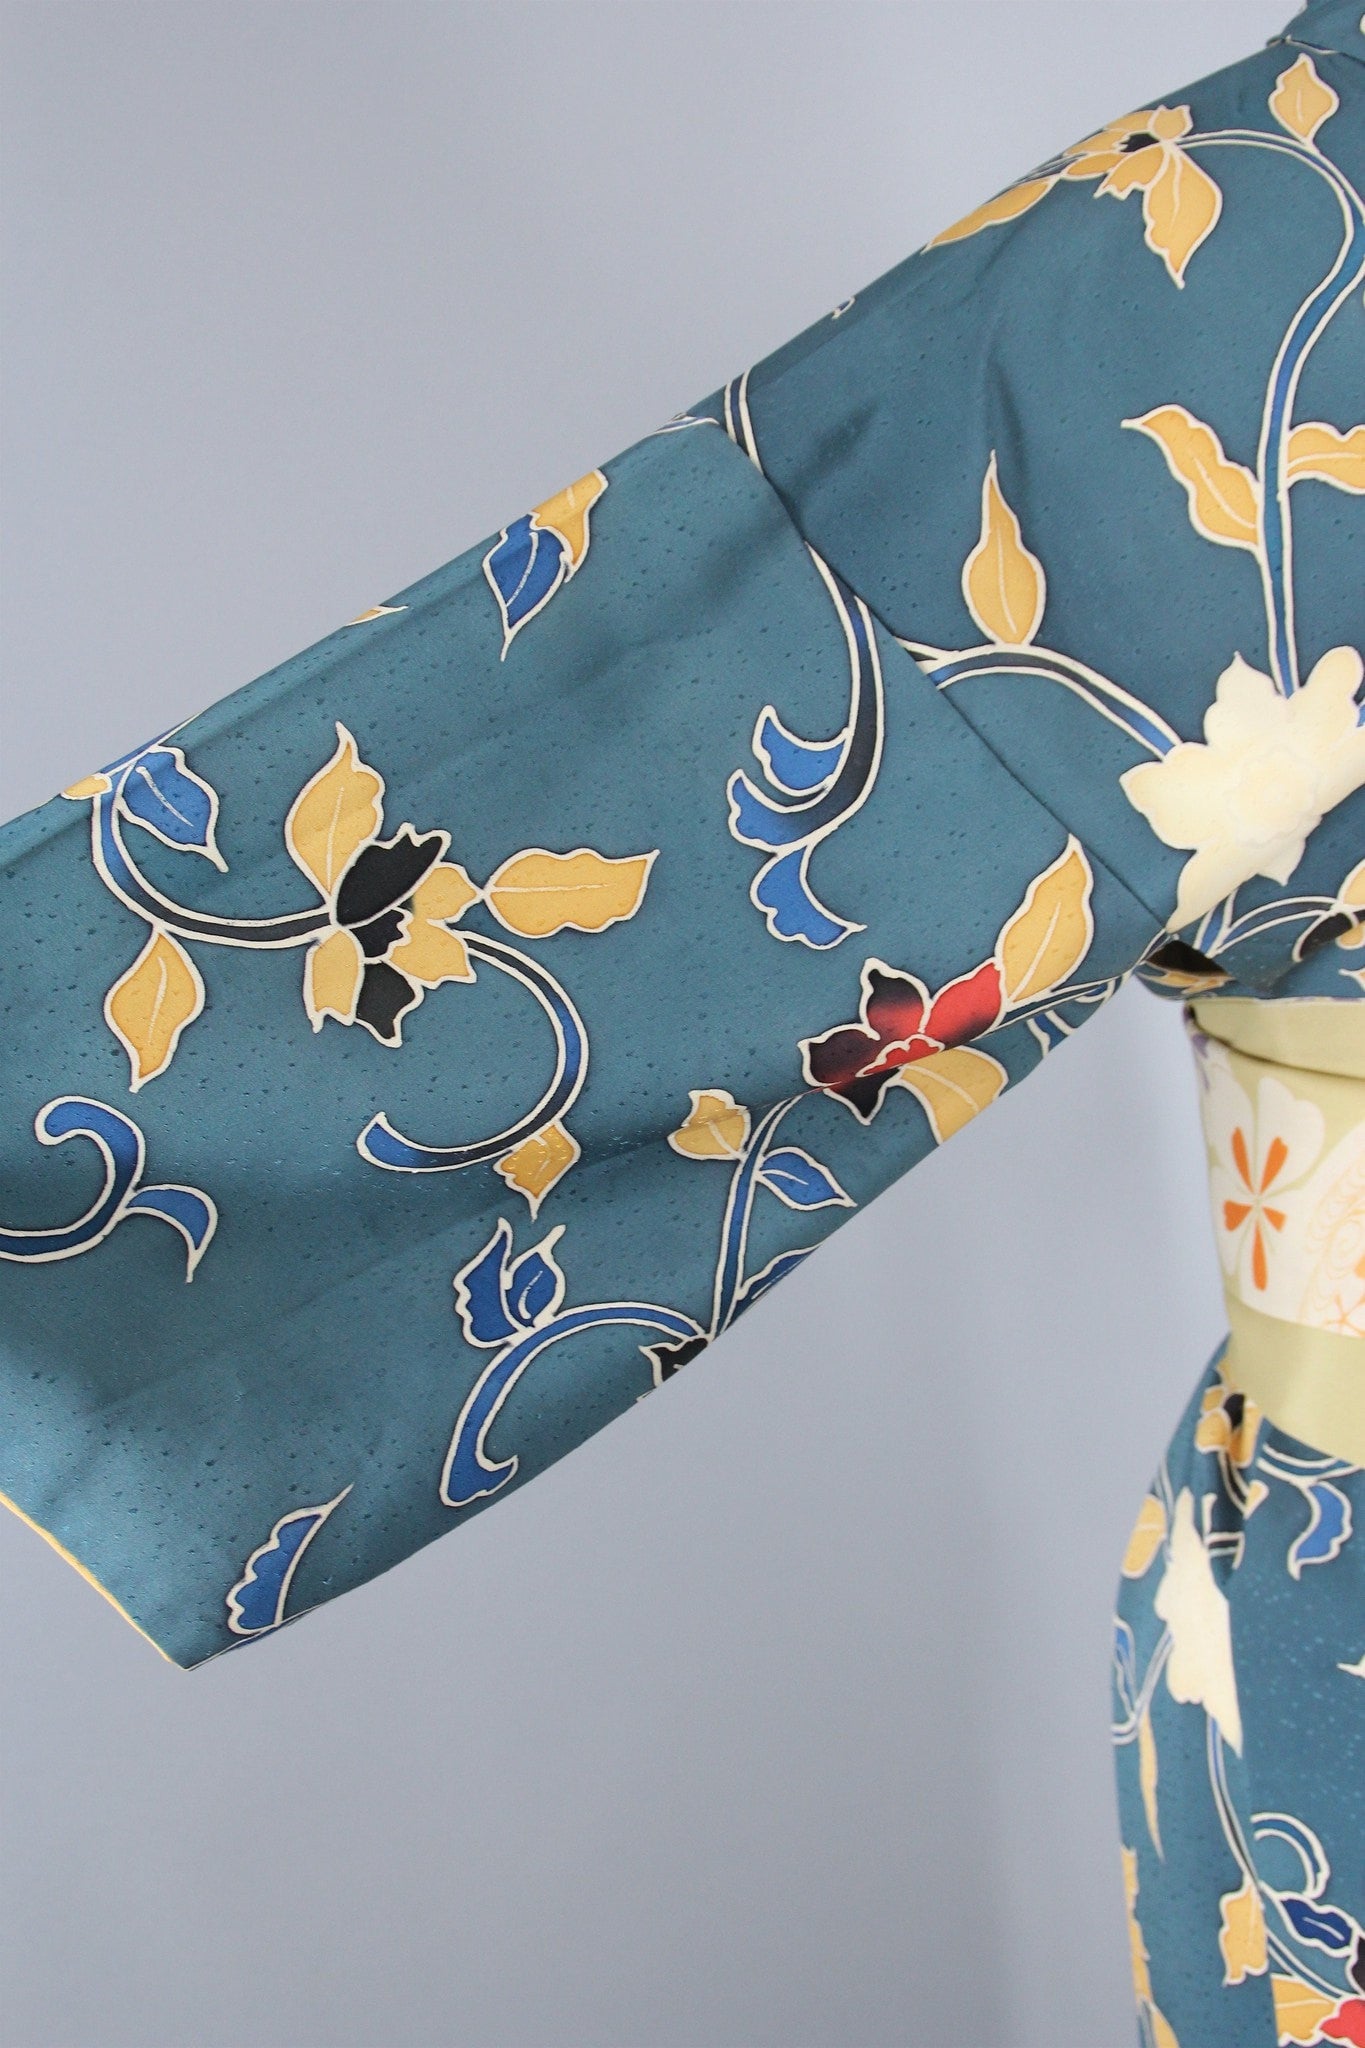 1970s Vintage Silk Kimono Robe with Teal Blue Floral Print - ThisBlueBird